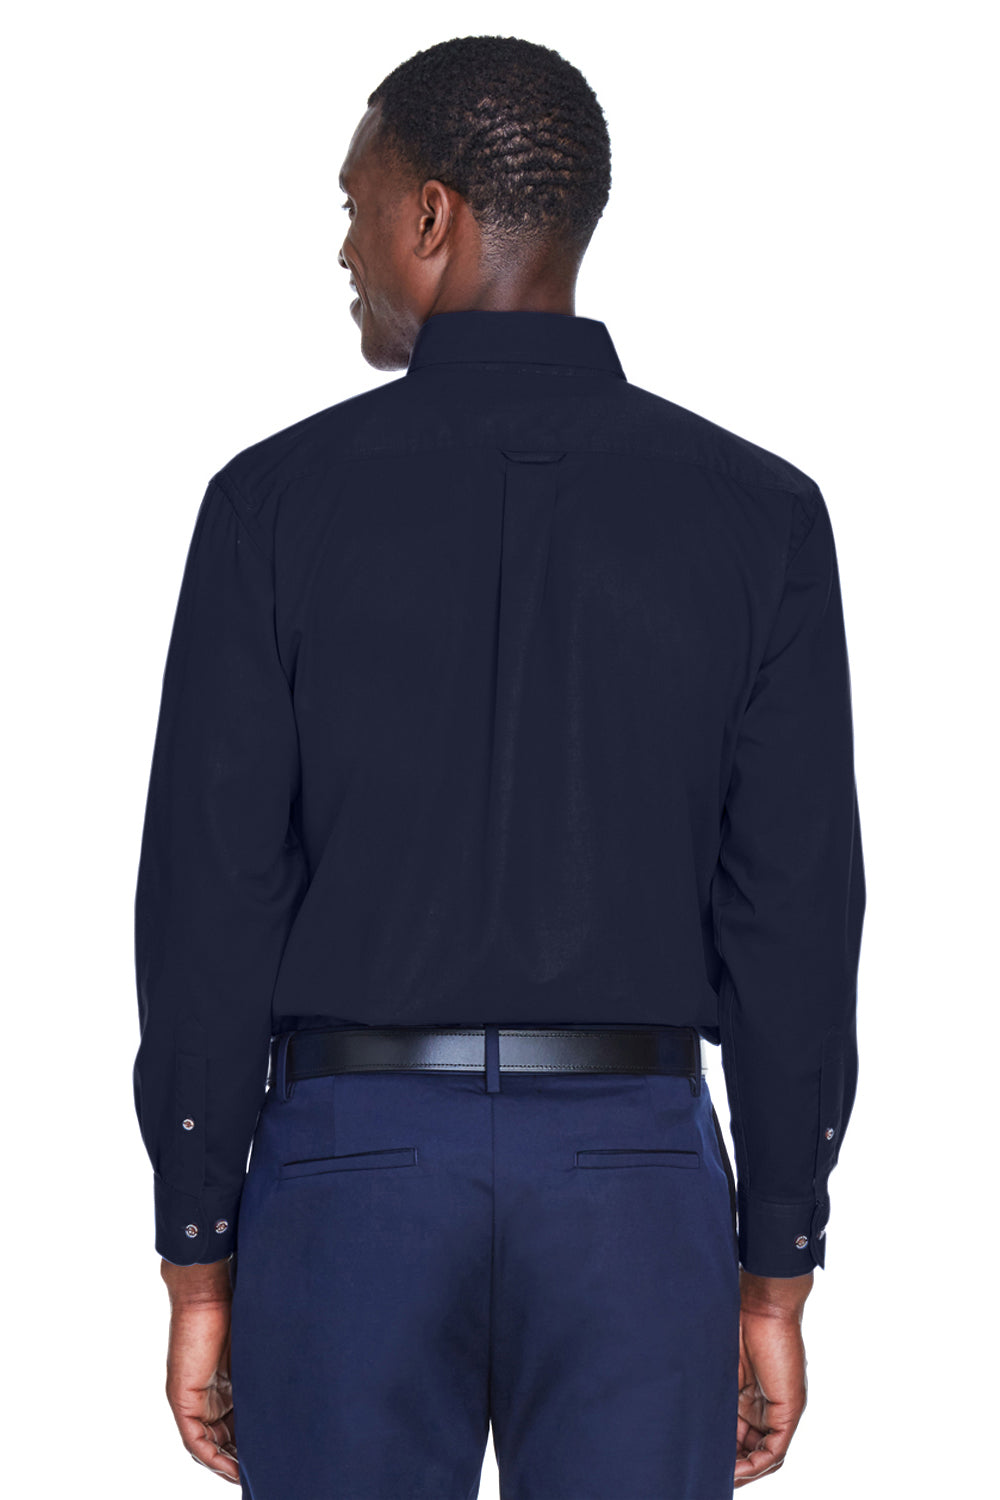 Harriton M500 Mens Wrinkle Resistant Long Sleeve Button Down Shirt w/ Pocket Navy Blue Back